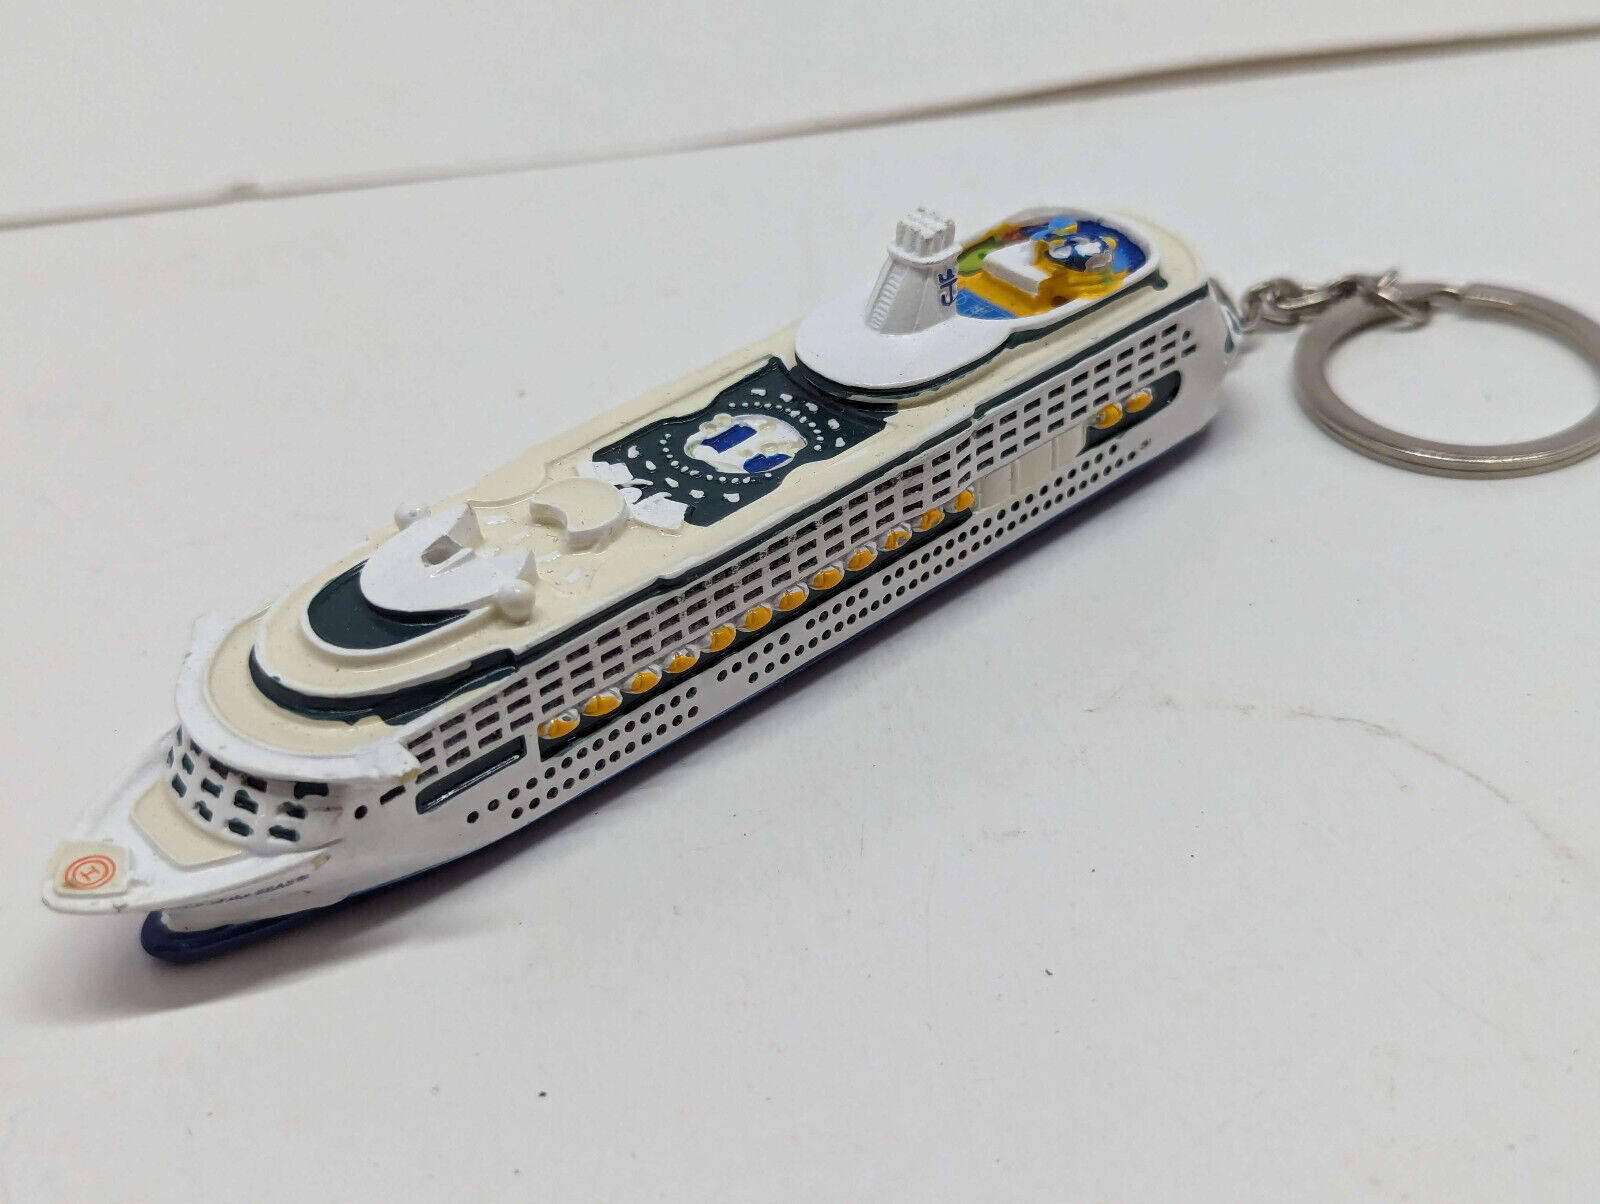 Royal Caribbean Voyager of the Seas cruise ship mini model souvenir nautical